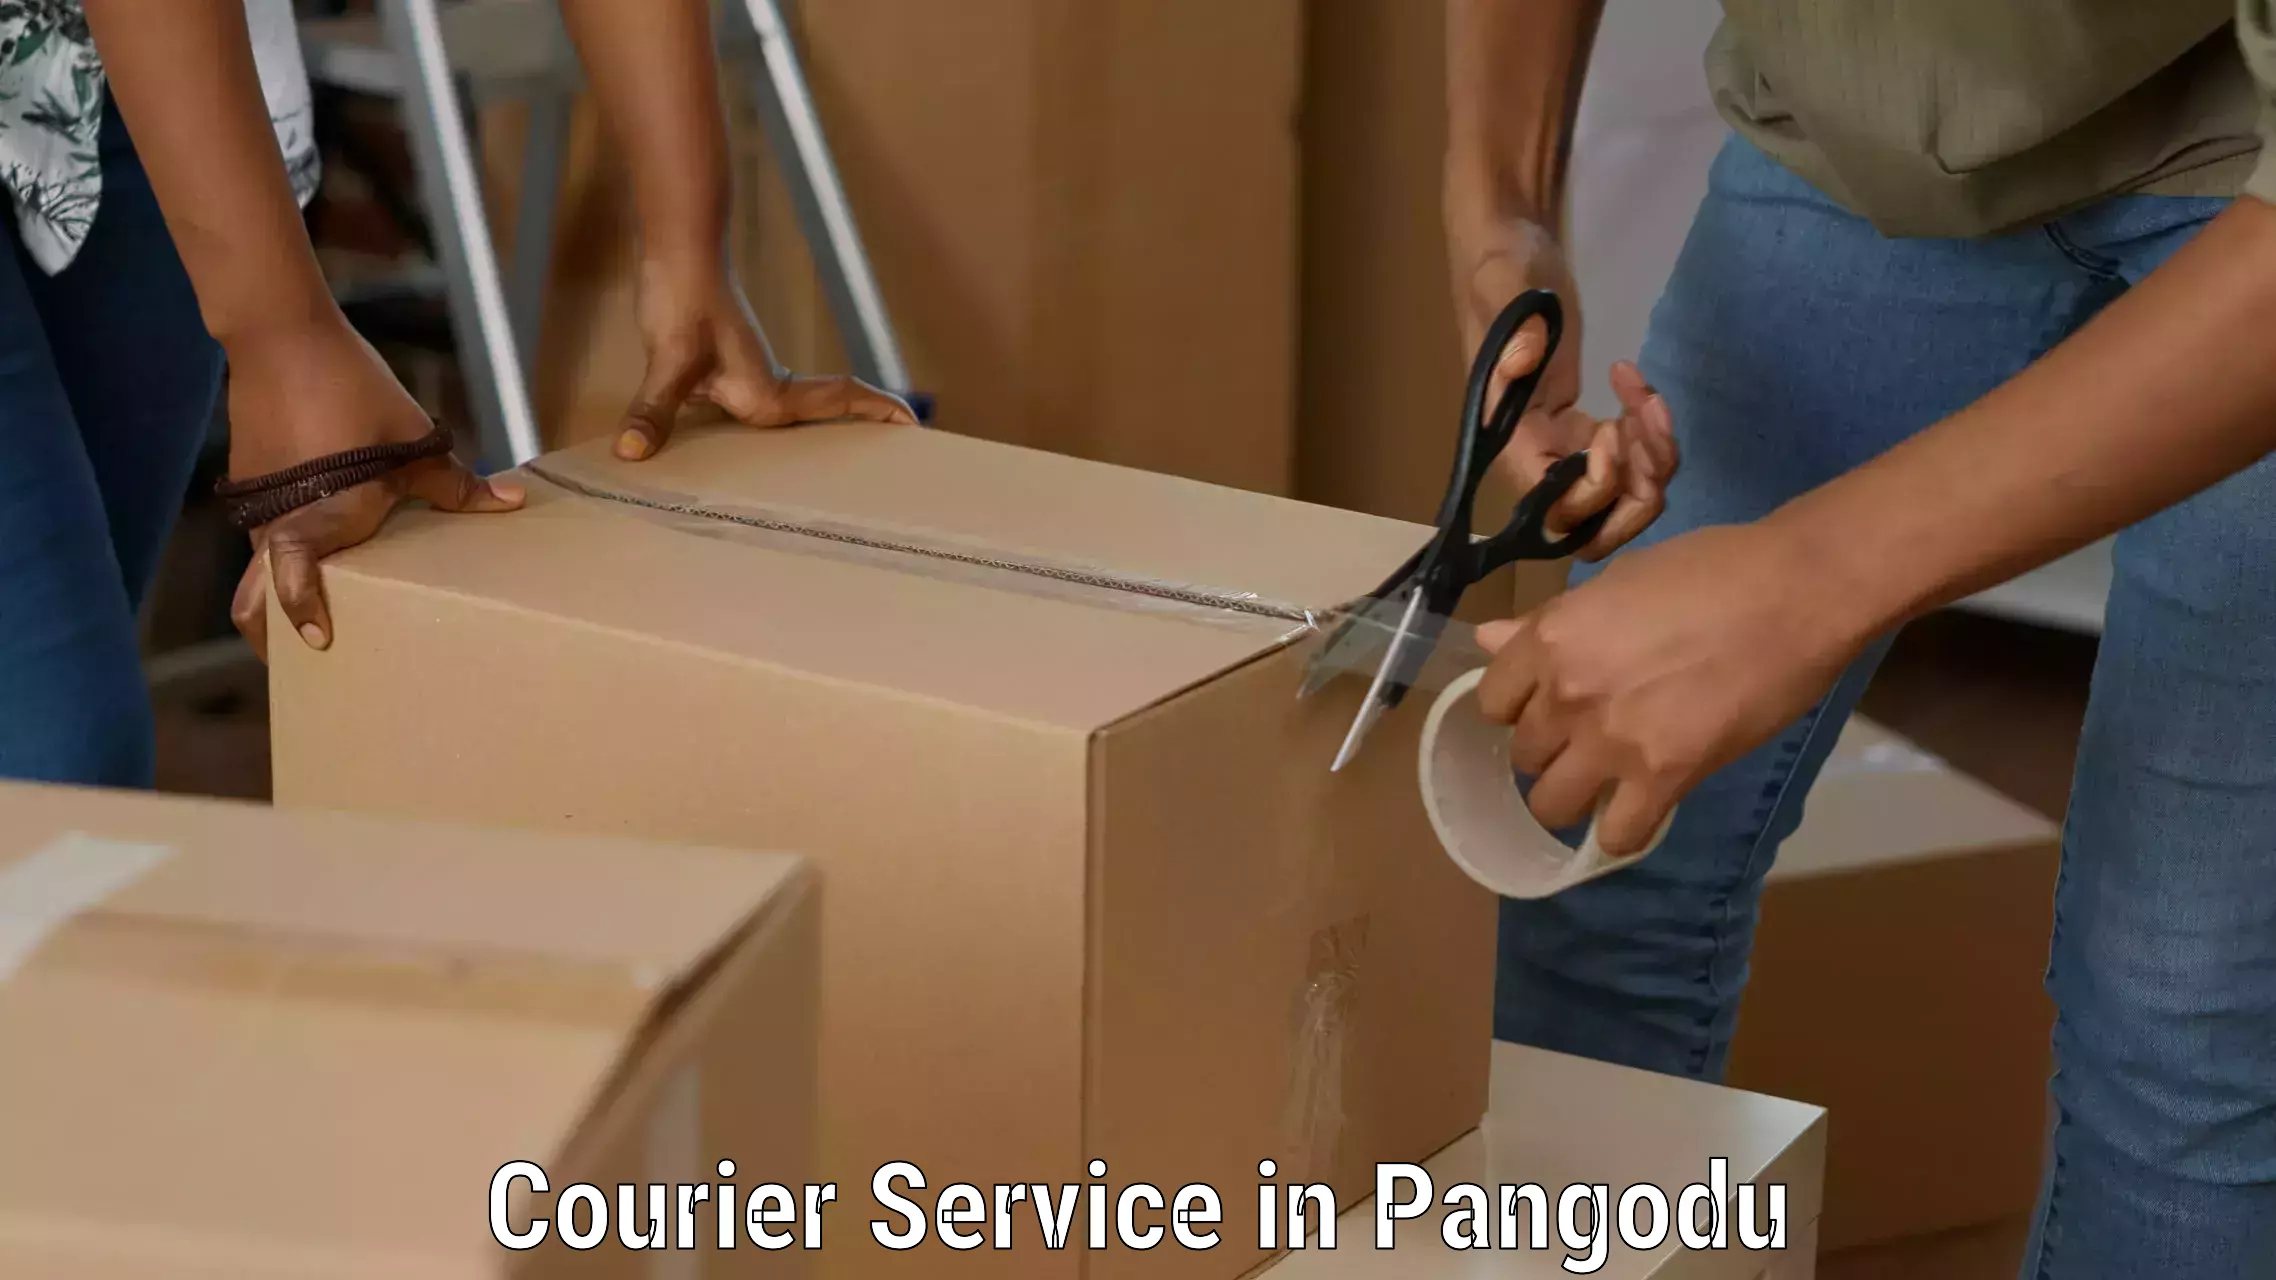 High-capacity parcel service in Pangodu